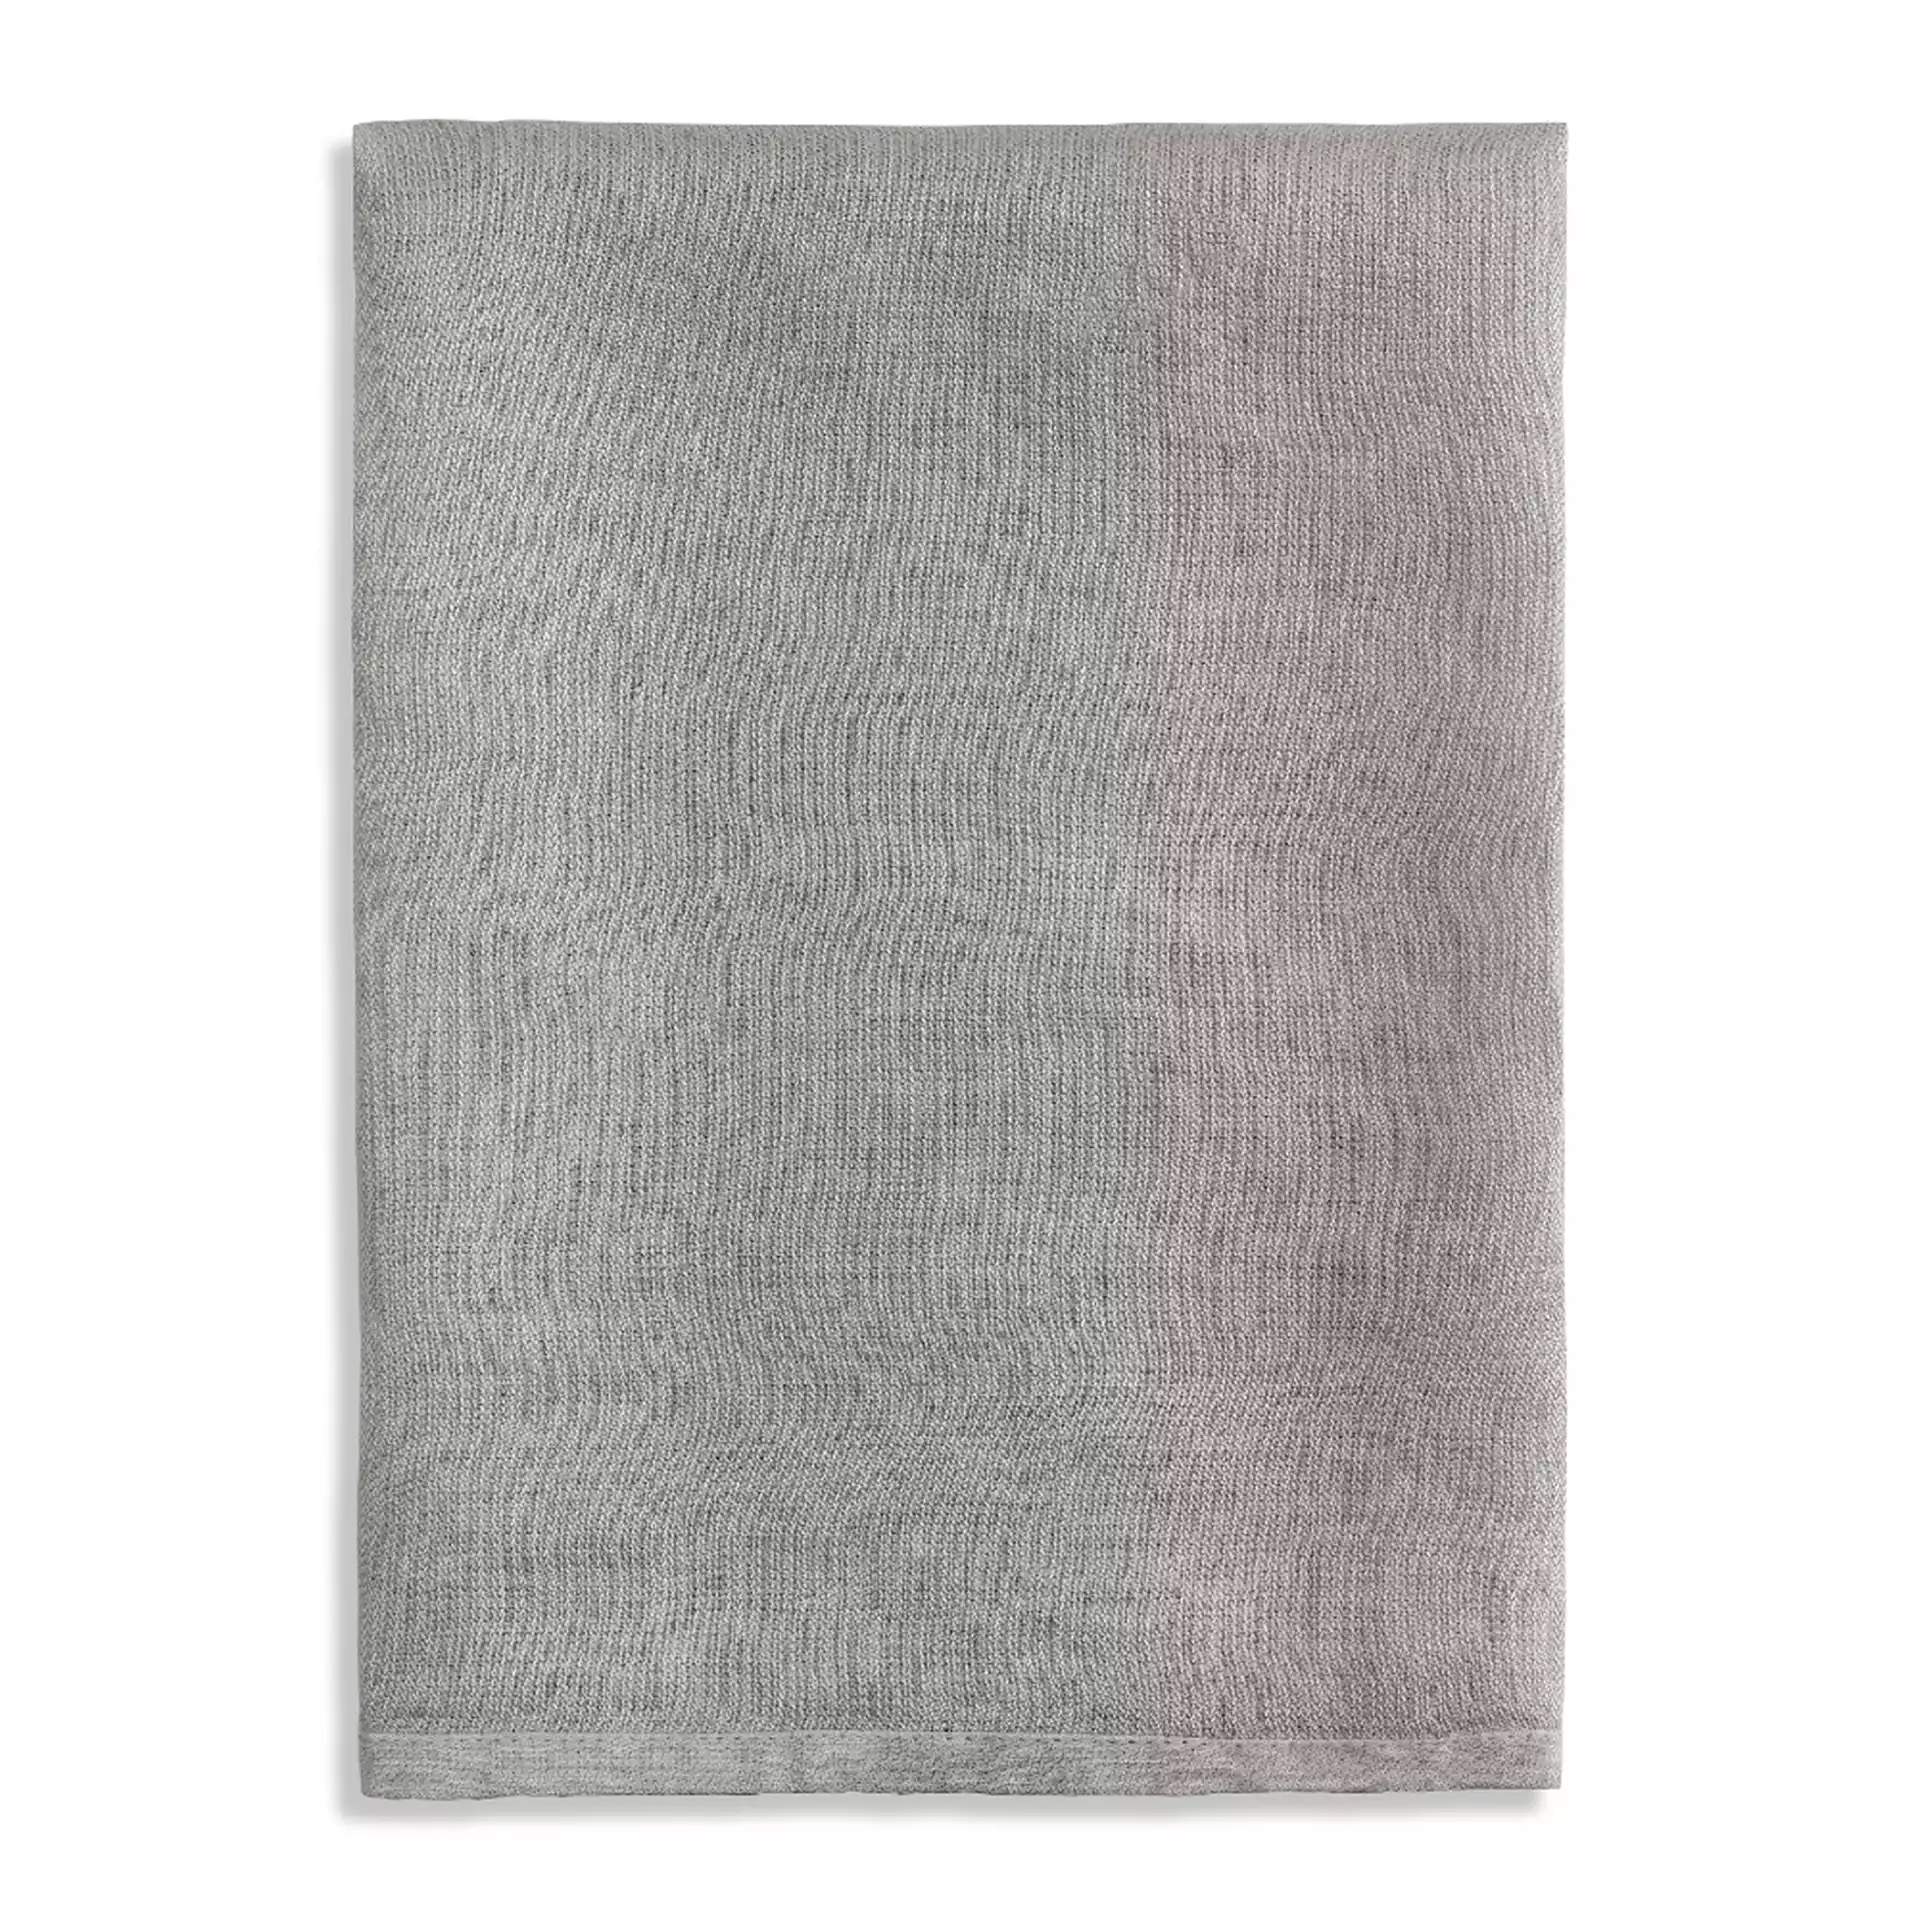 L'Objet Sateen Modern Classic Grey Linen Napkins - Set of 4